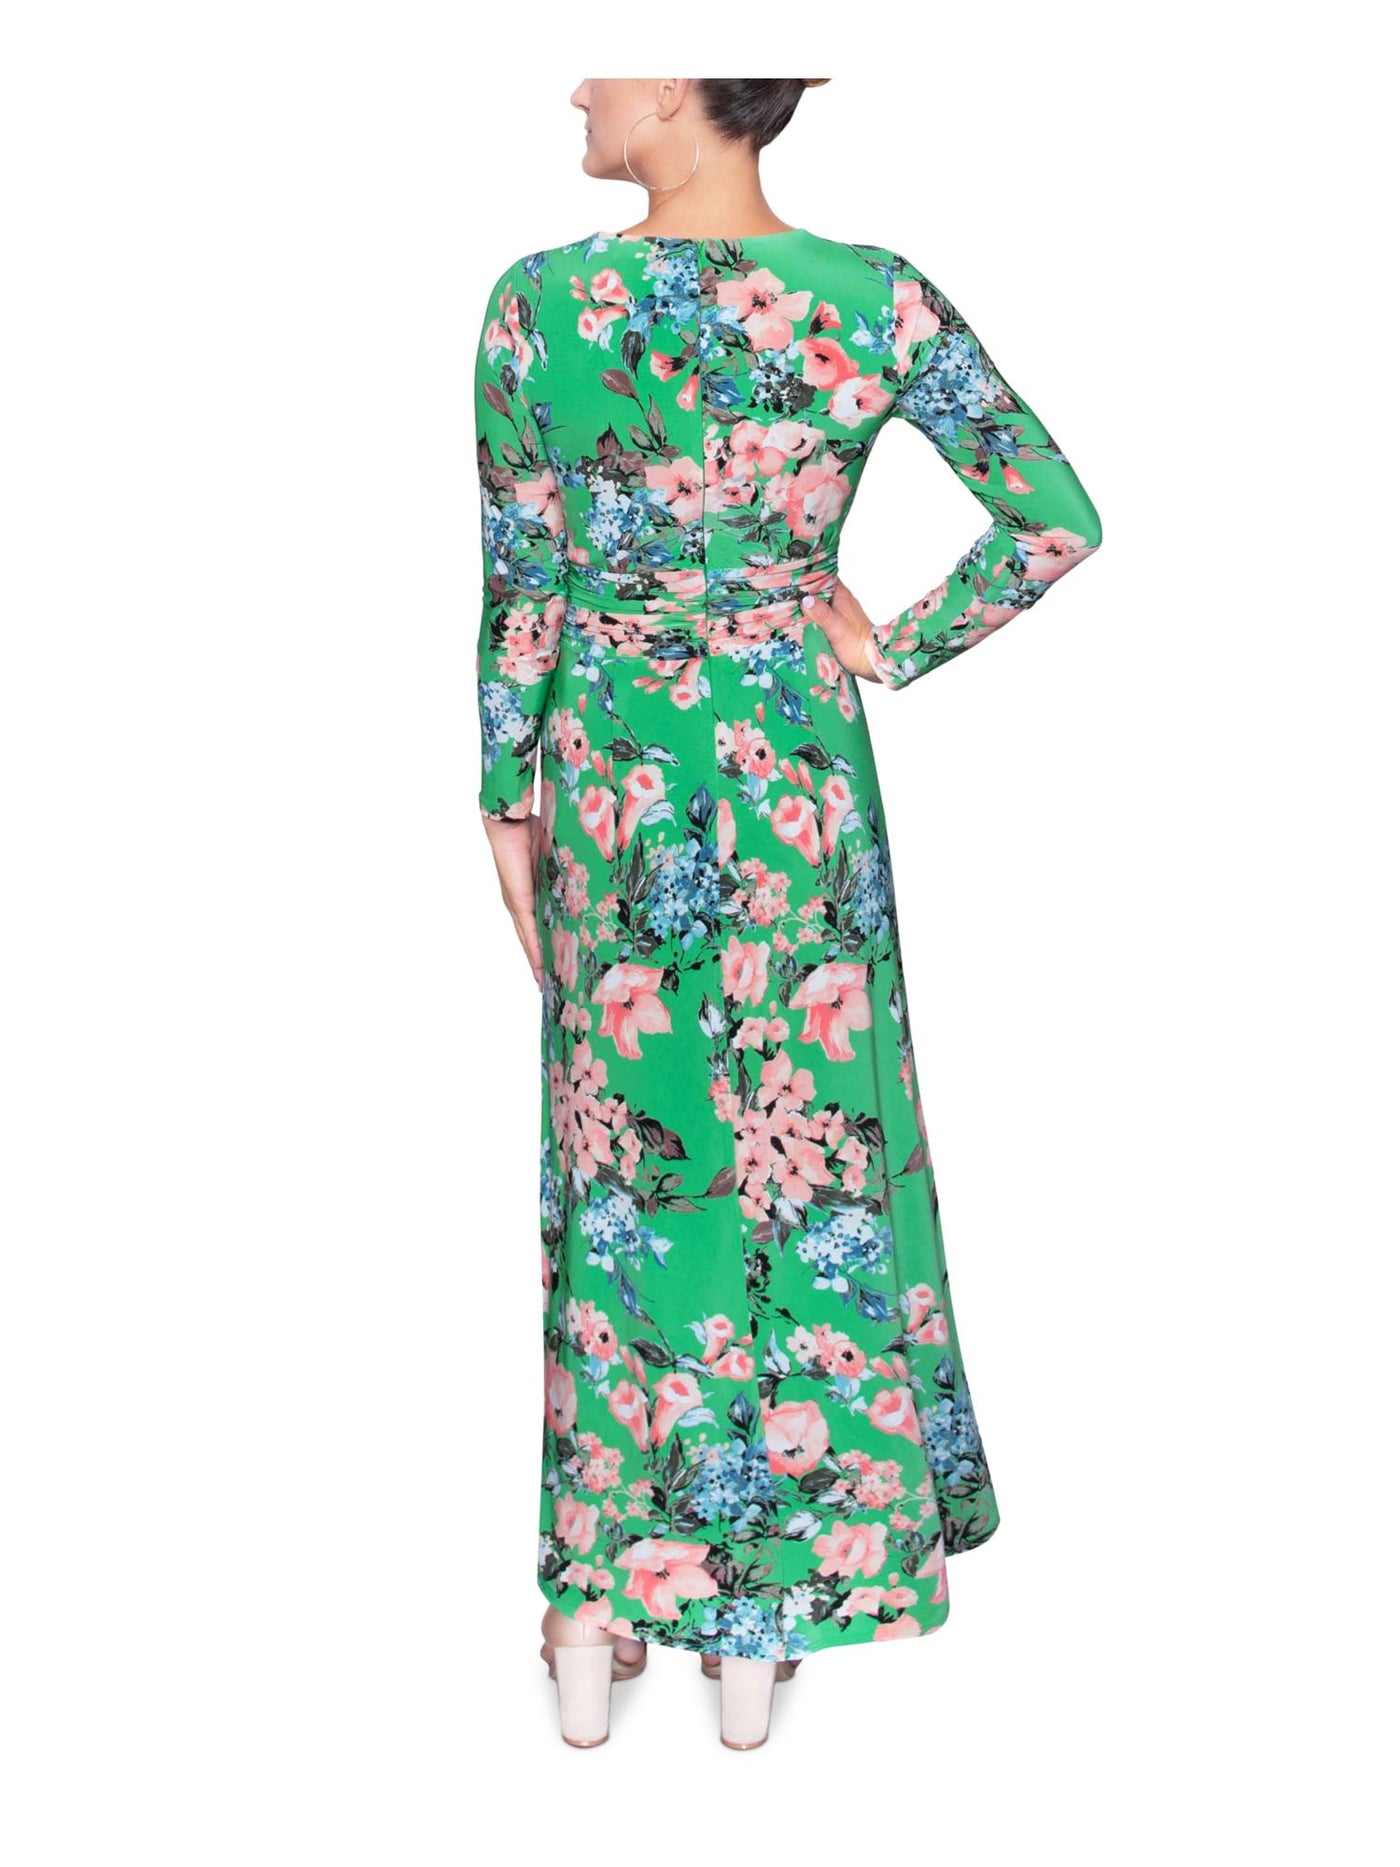 RACHEL RACHEL ROY Womens Green Stretch Zippered Ruched Jersey-knit Floral Long Sleeve Surplice Neckline Maxi Evening Faux Wrap Dress XS